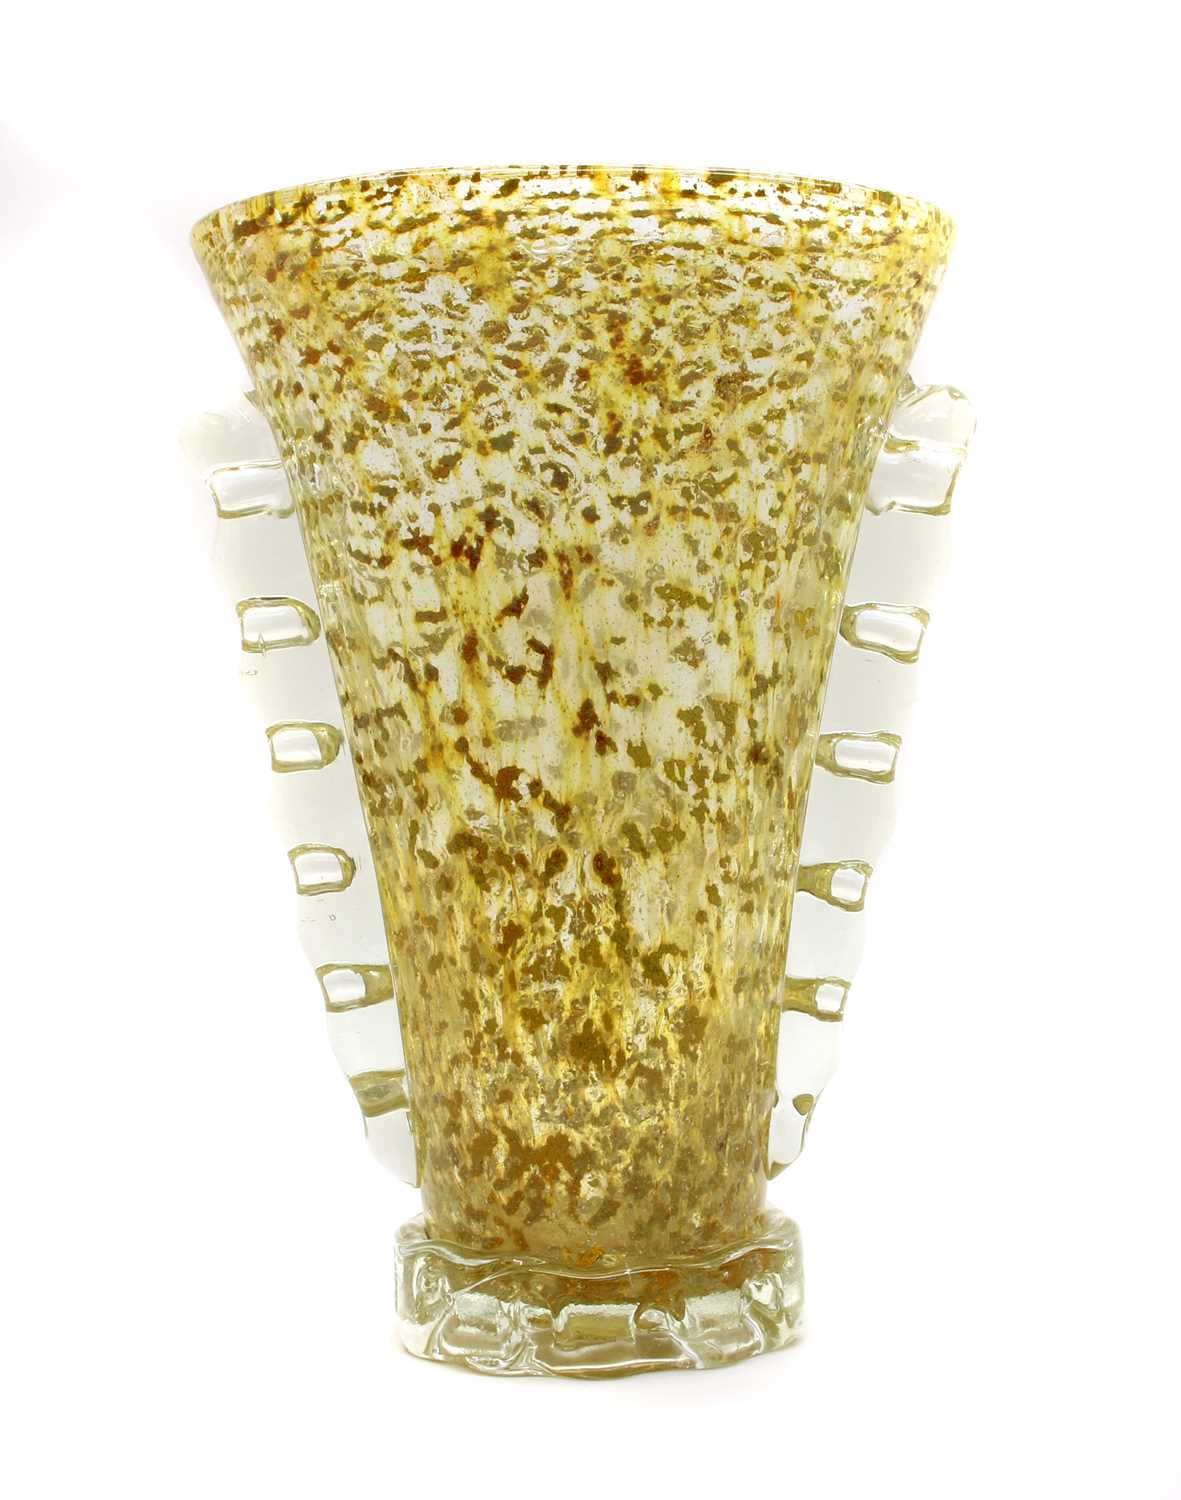 Lot 394 - A Murano glass vase